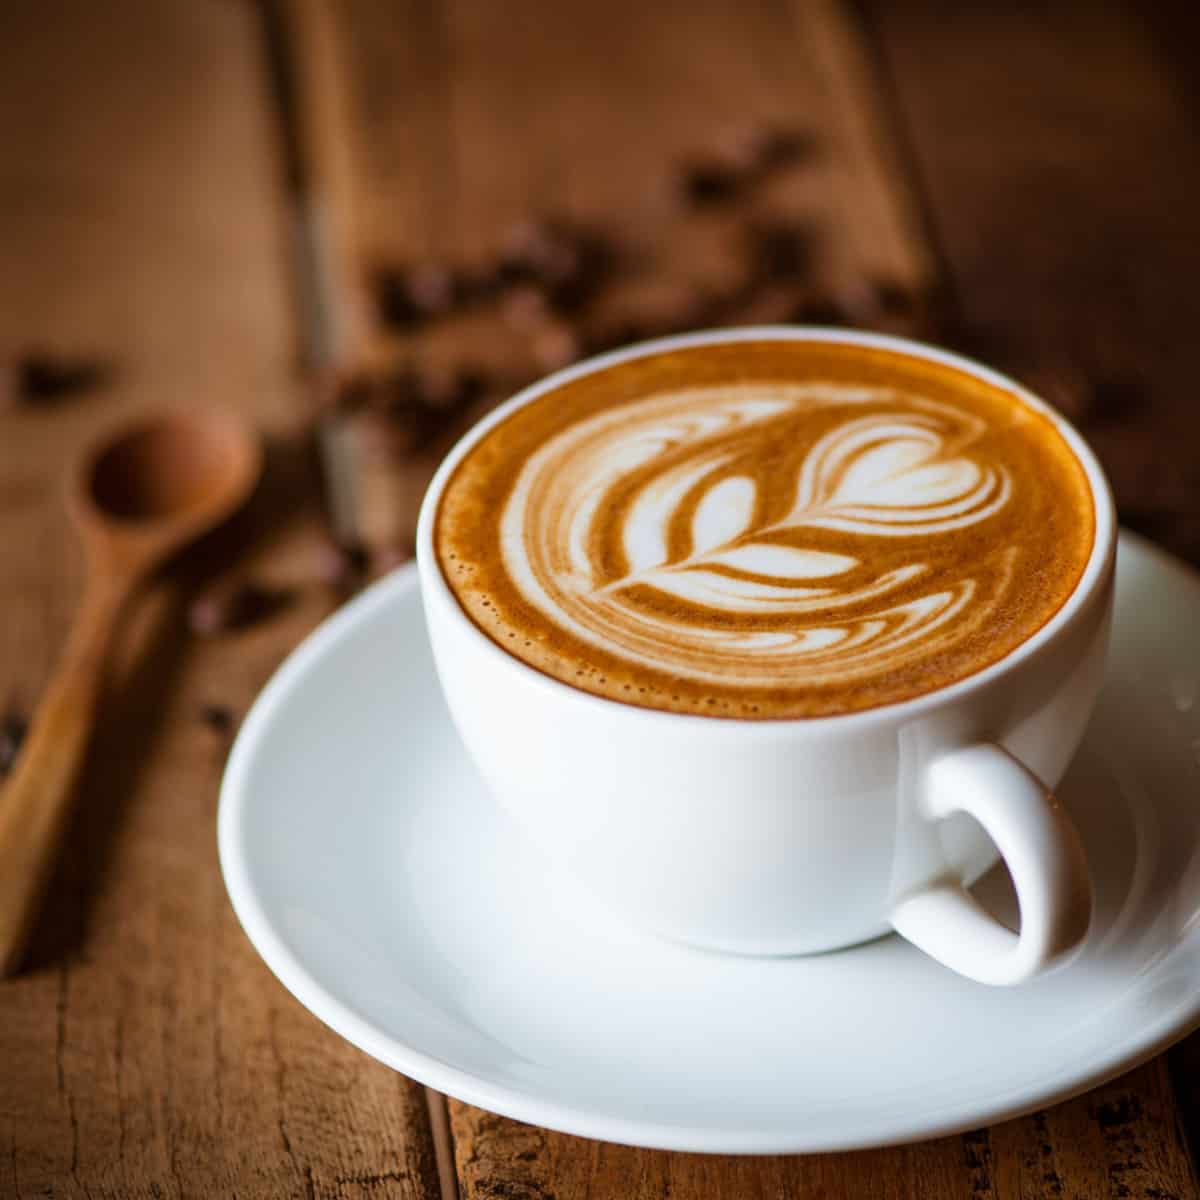 latte with flower design using steamed milk